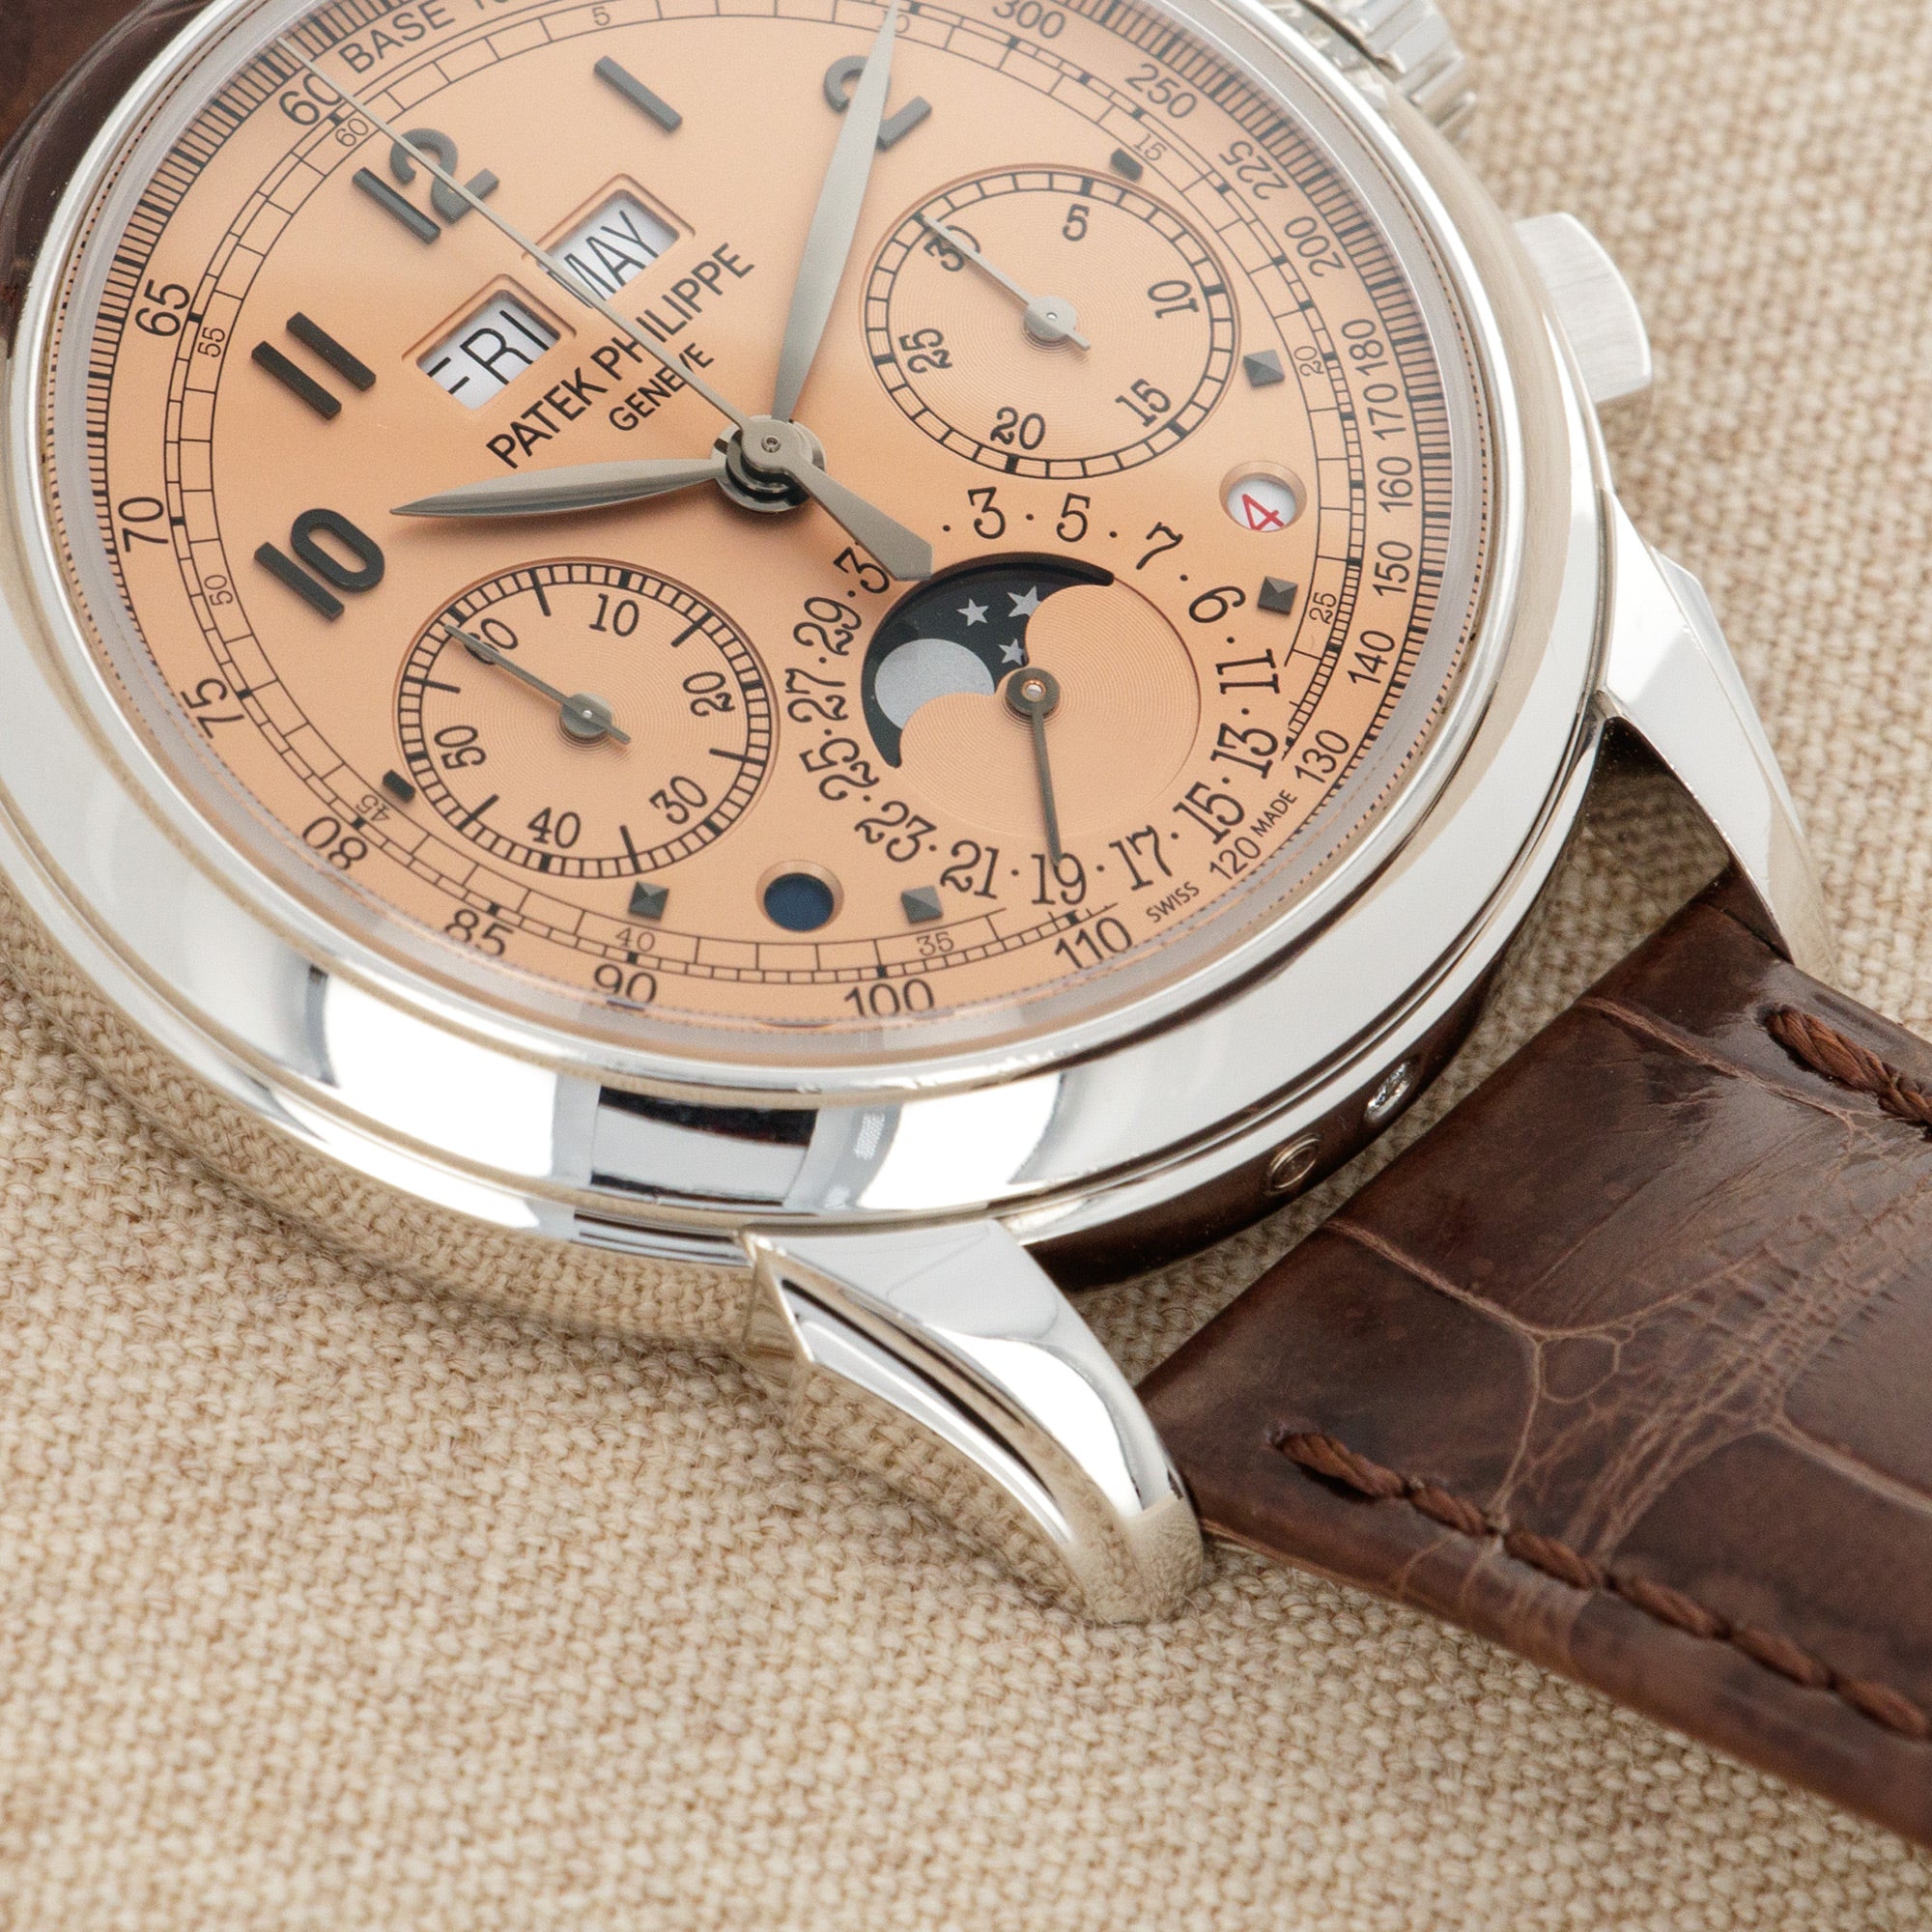 Patek Philippe - Patek Philippe Platinum Perpetual Calendar Chrono Watch Ref. 5270 - The Keystone Watches